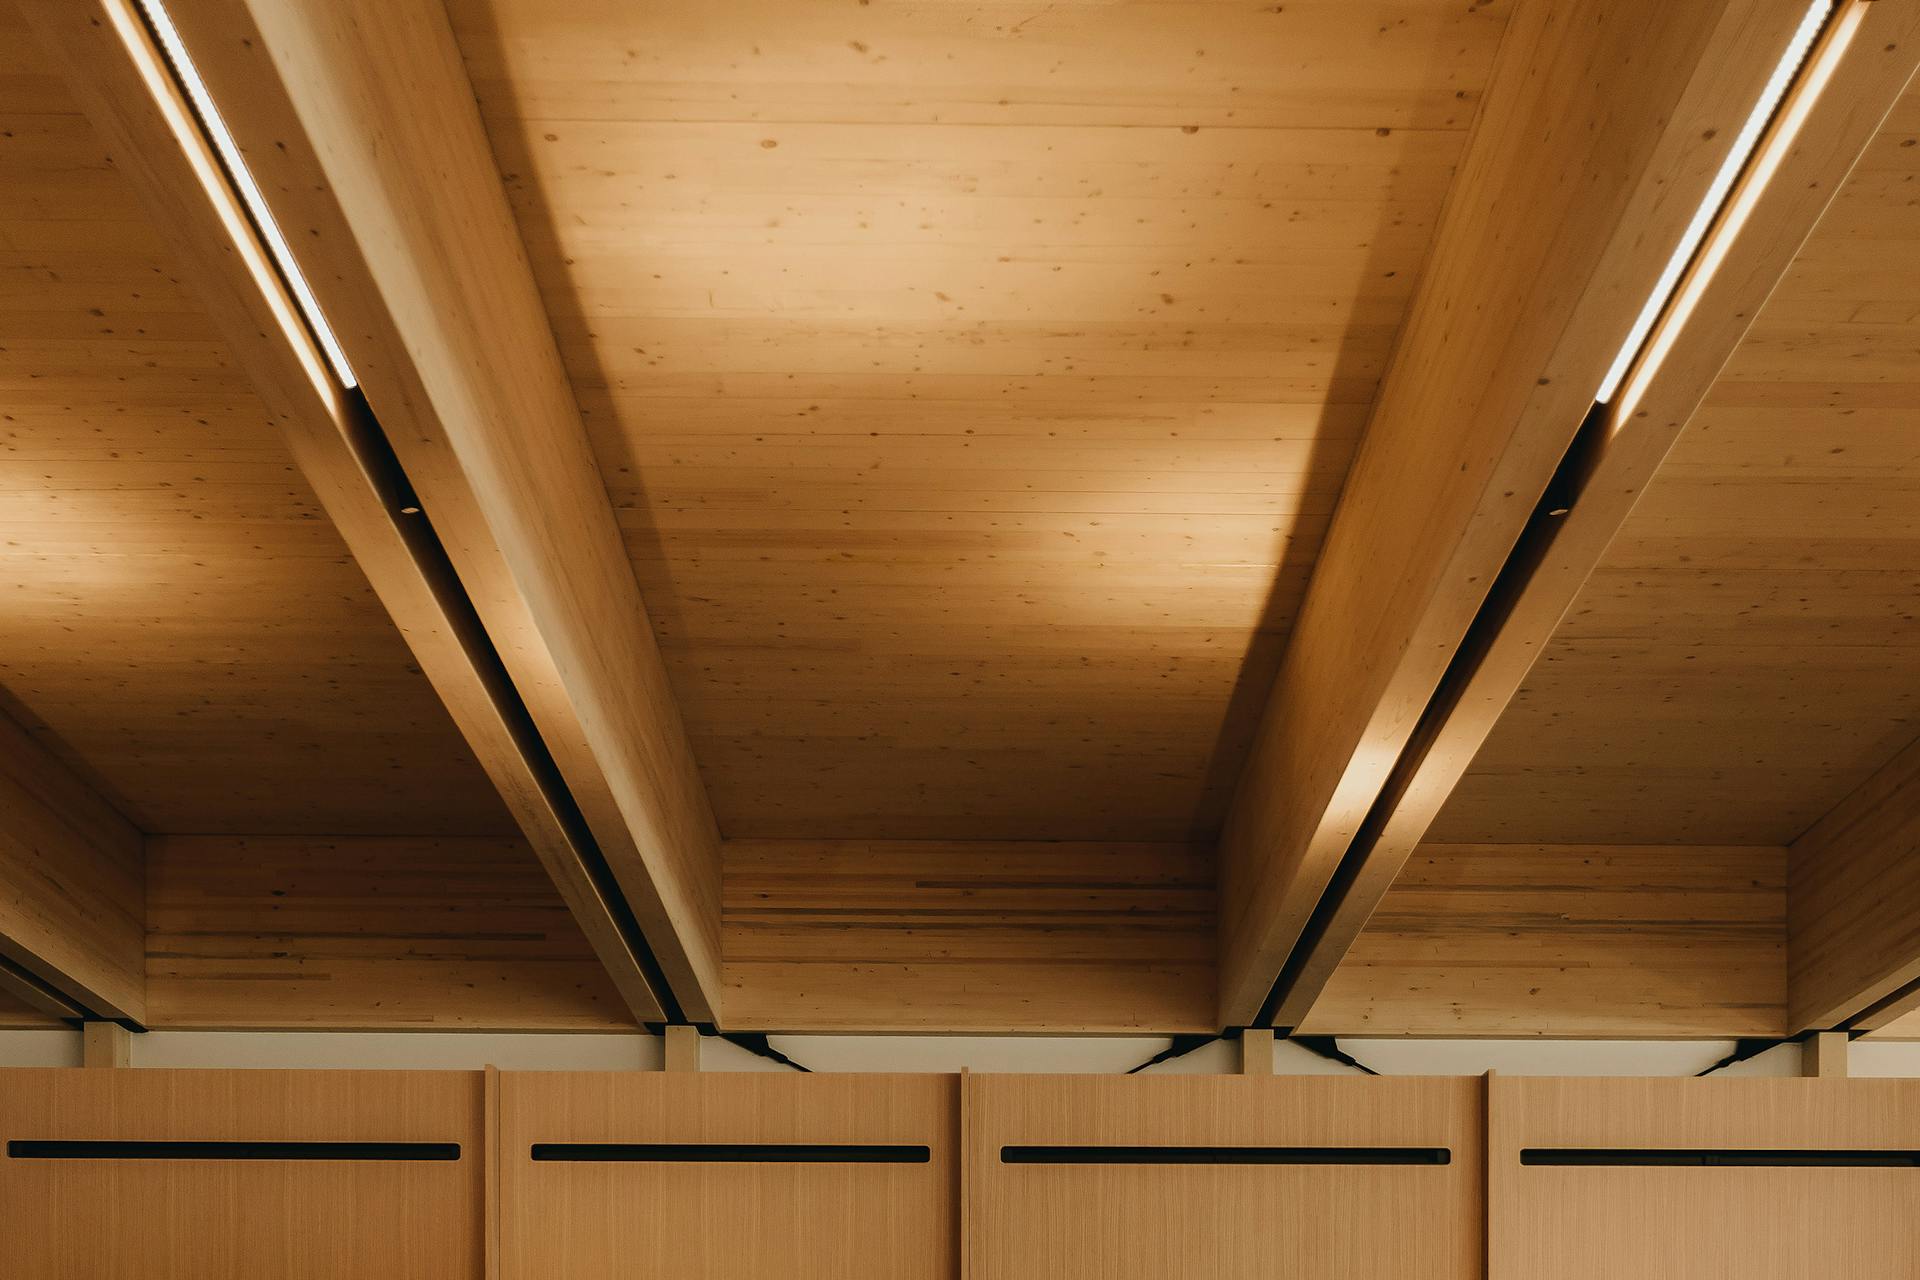 Reclaimed wood ceiling